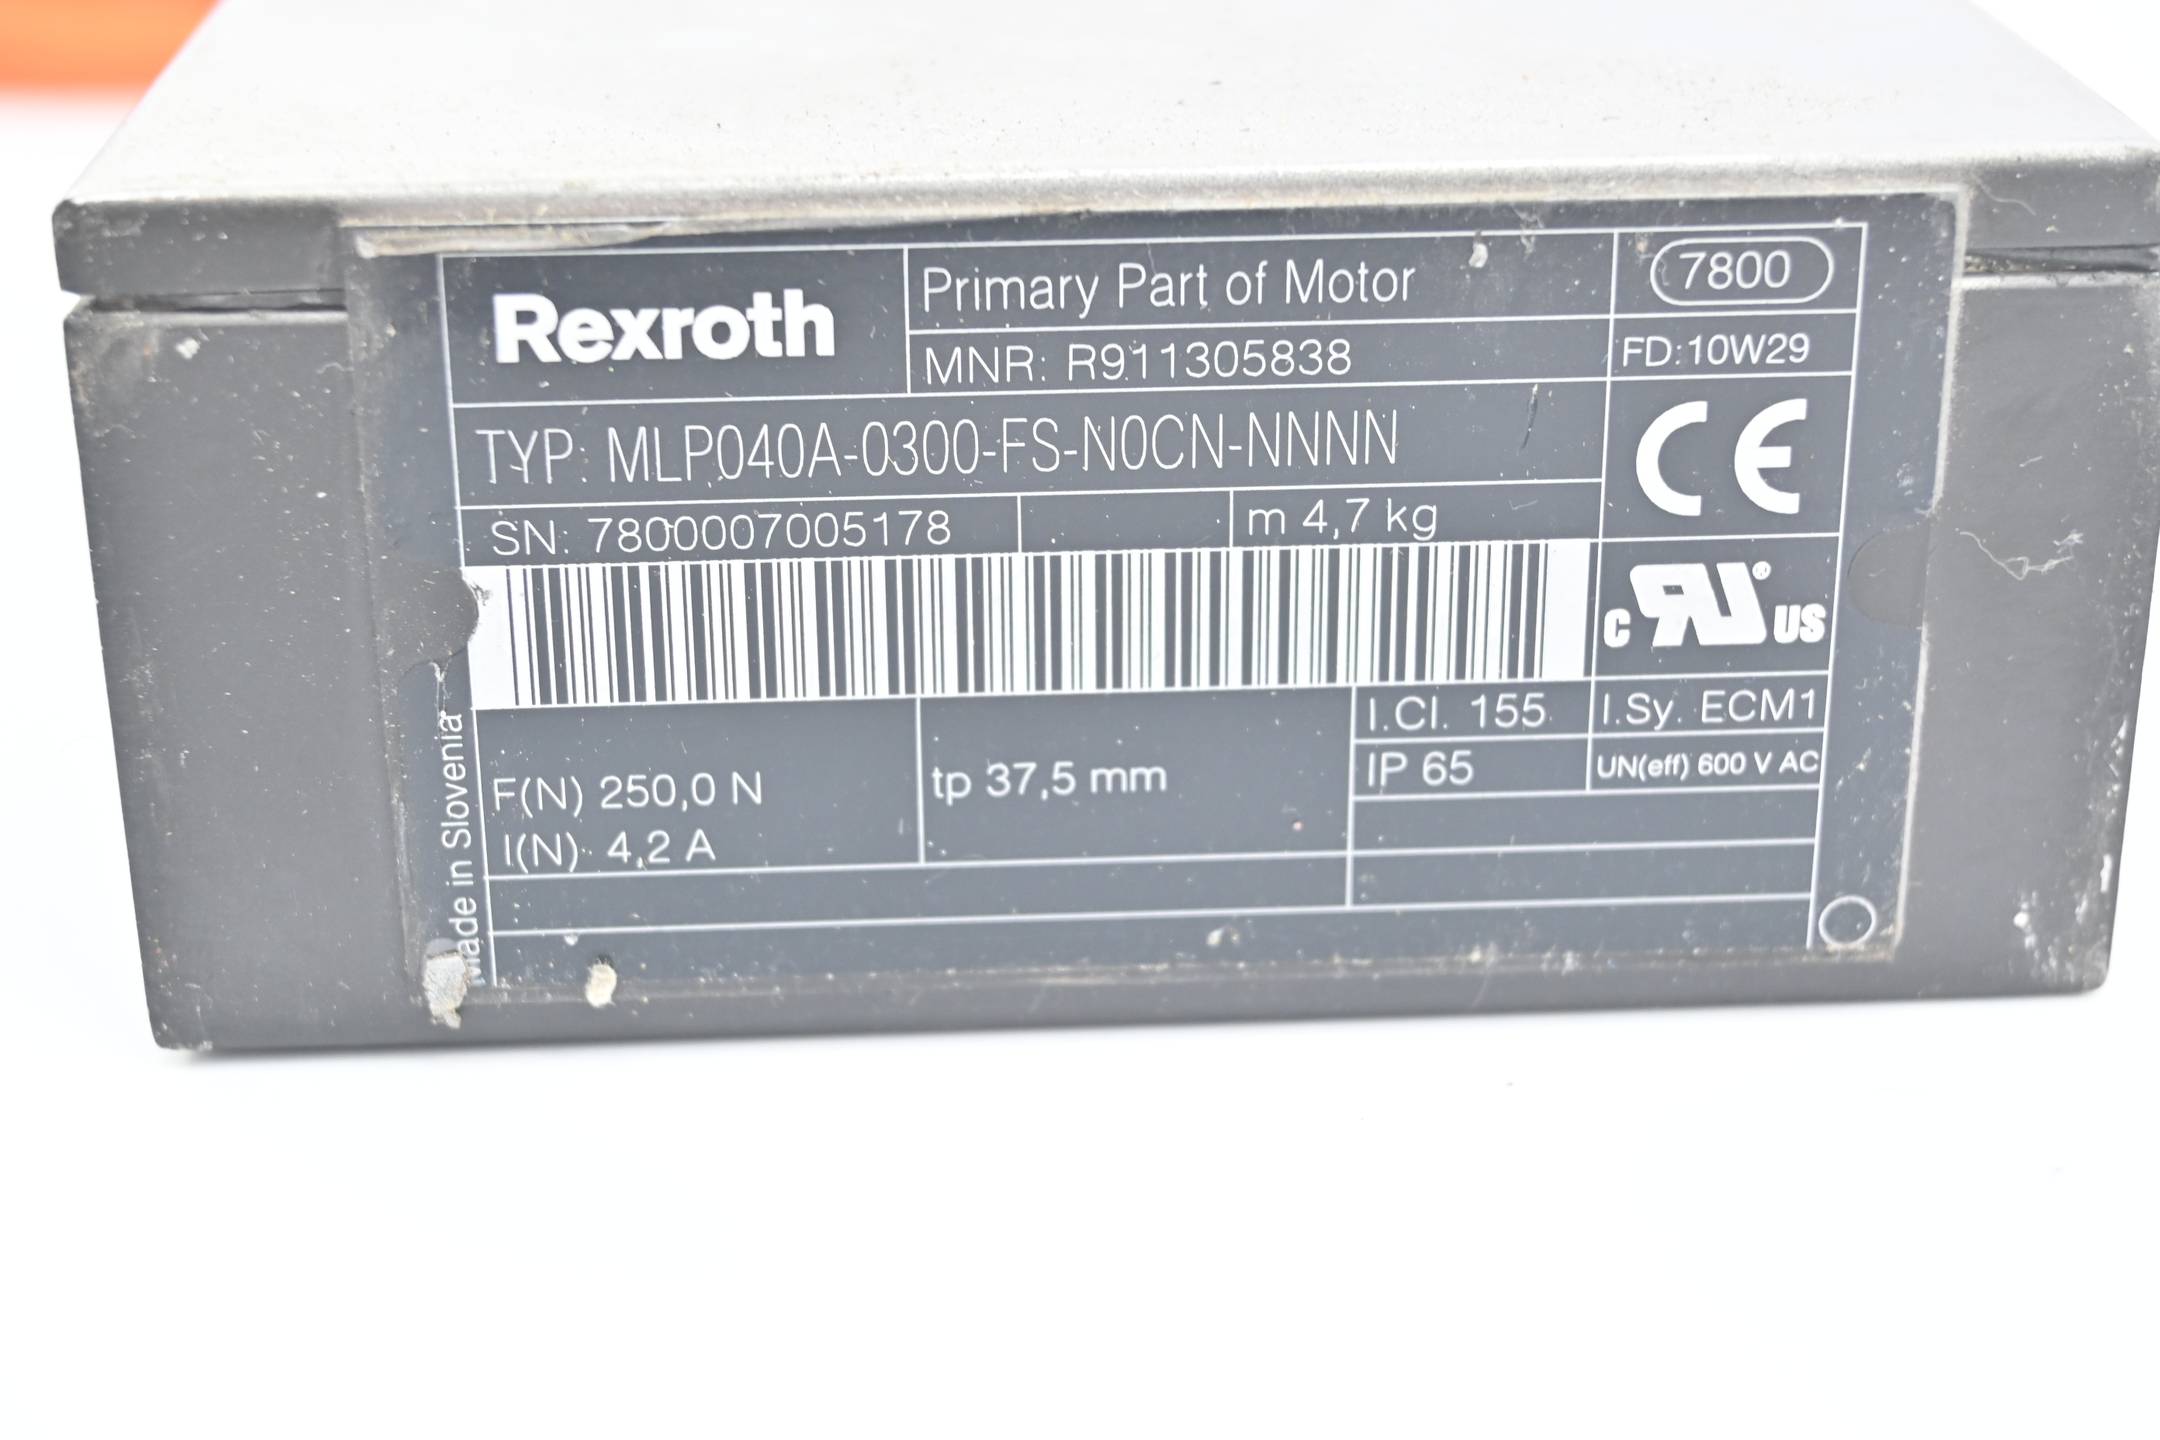 Rexroth Linearmotor Primärteil MLP040A-0300-FS-N0CN-NNNN ( R911305838 )